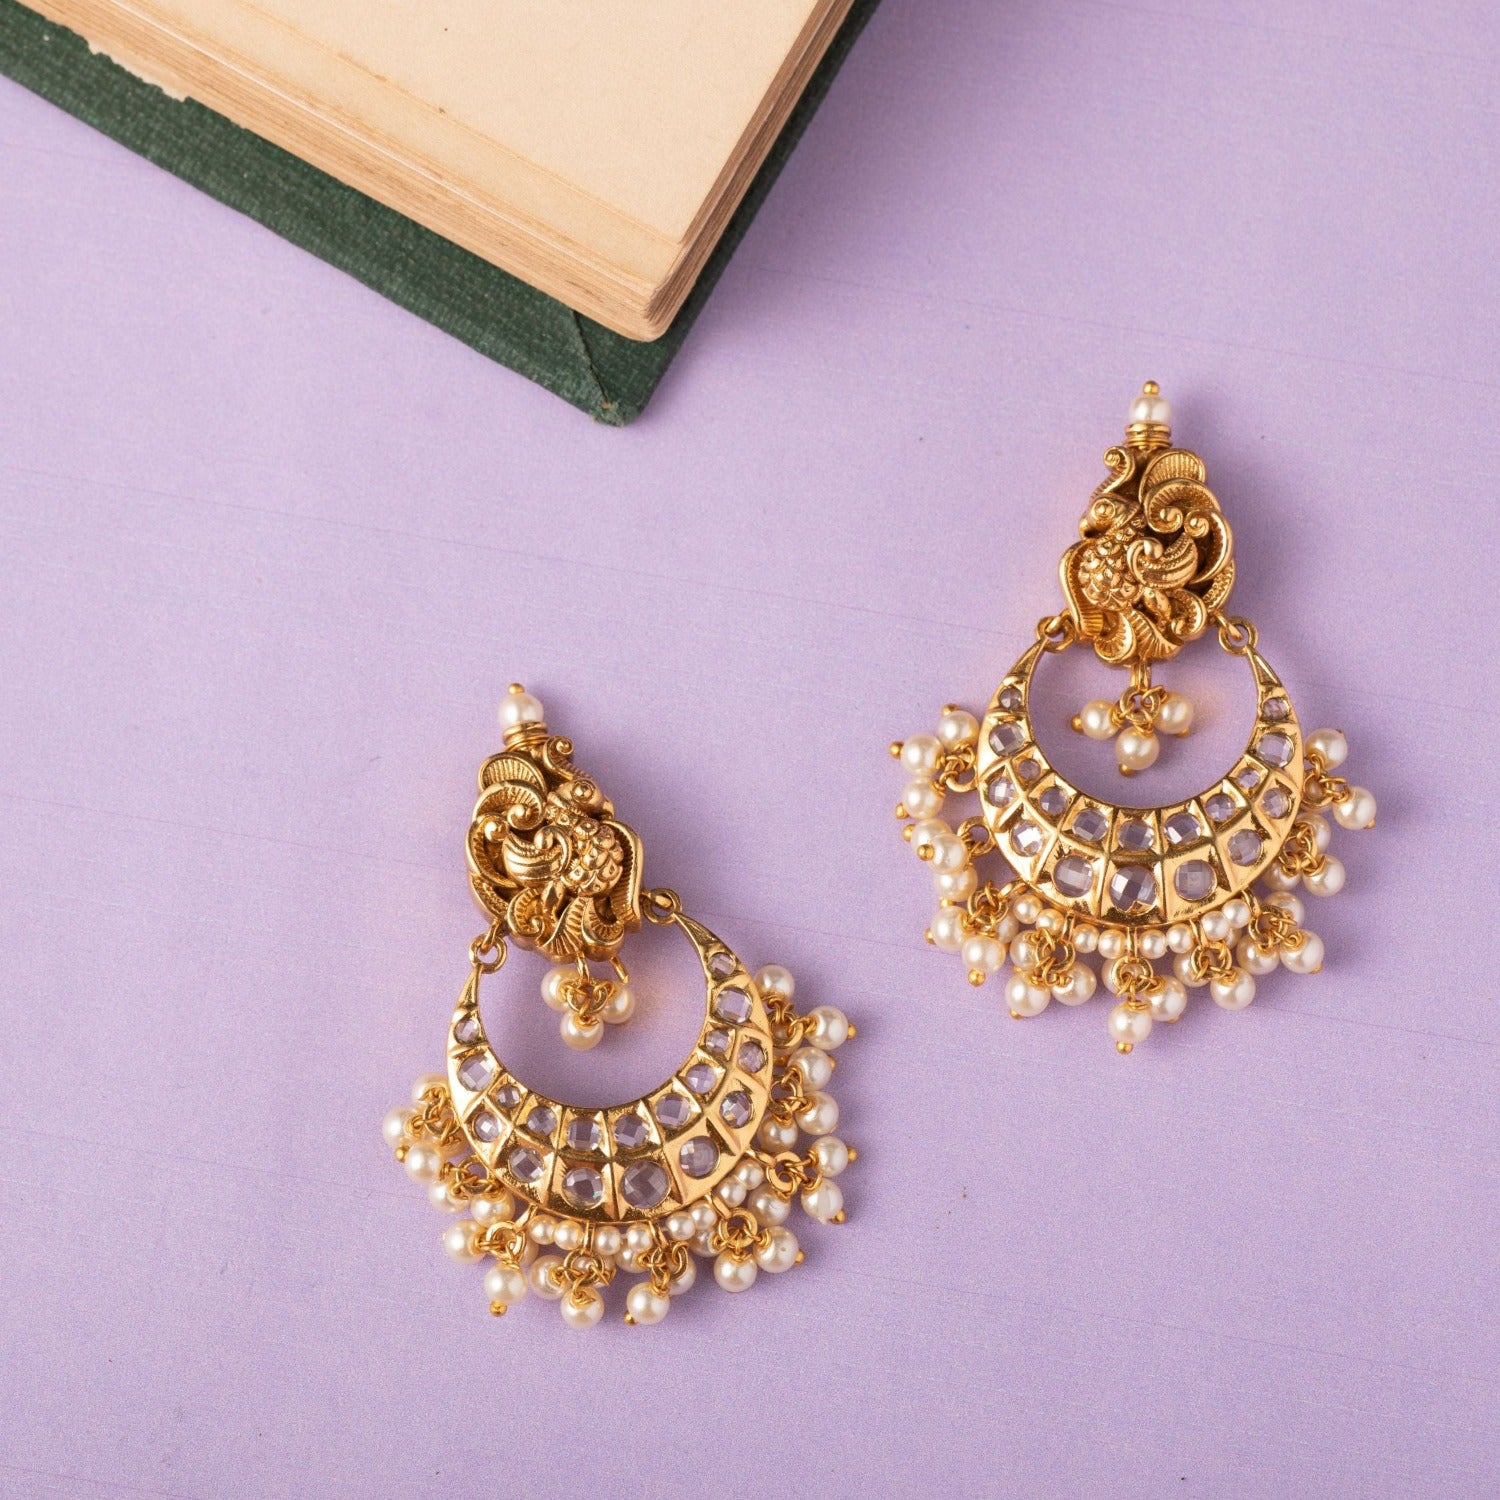 Chand Bali Style Gold Drop Earrings